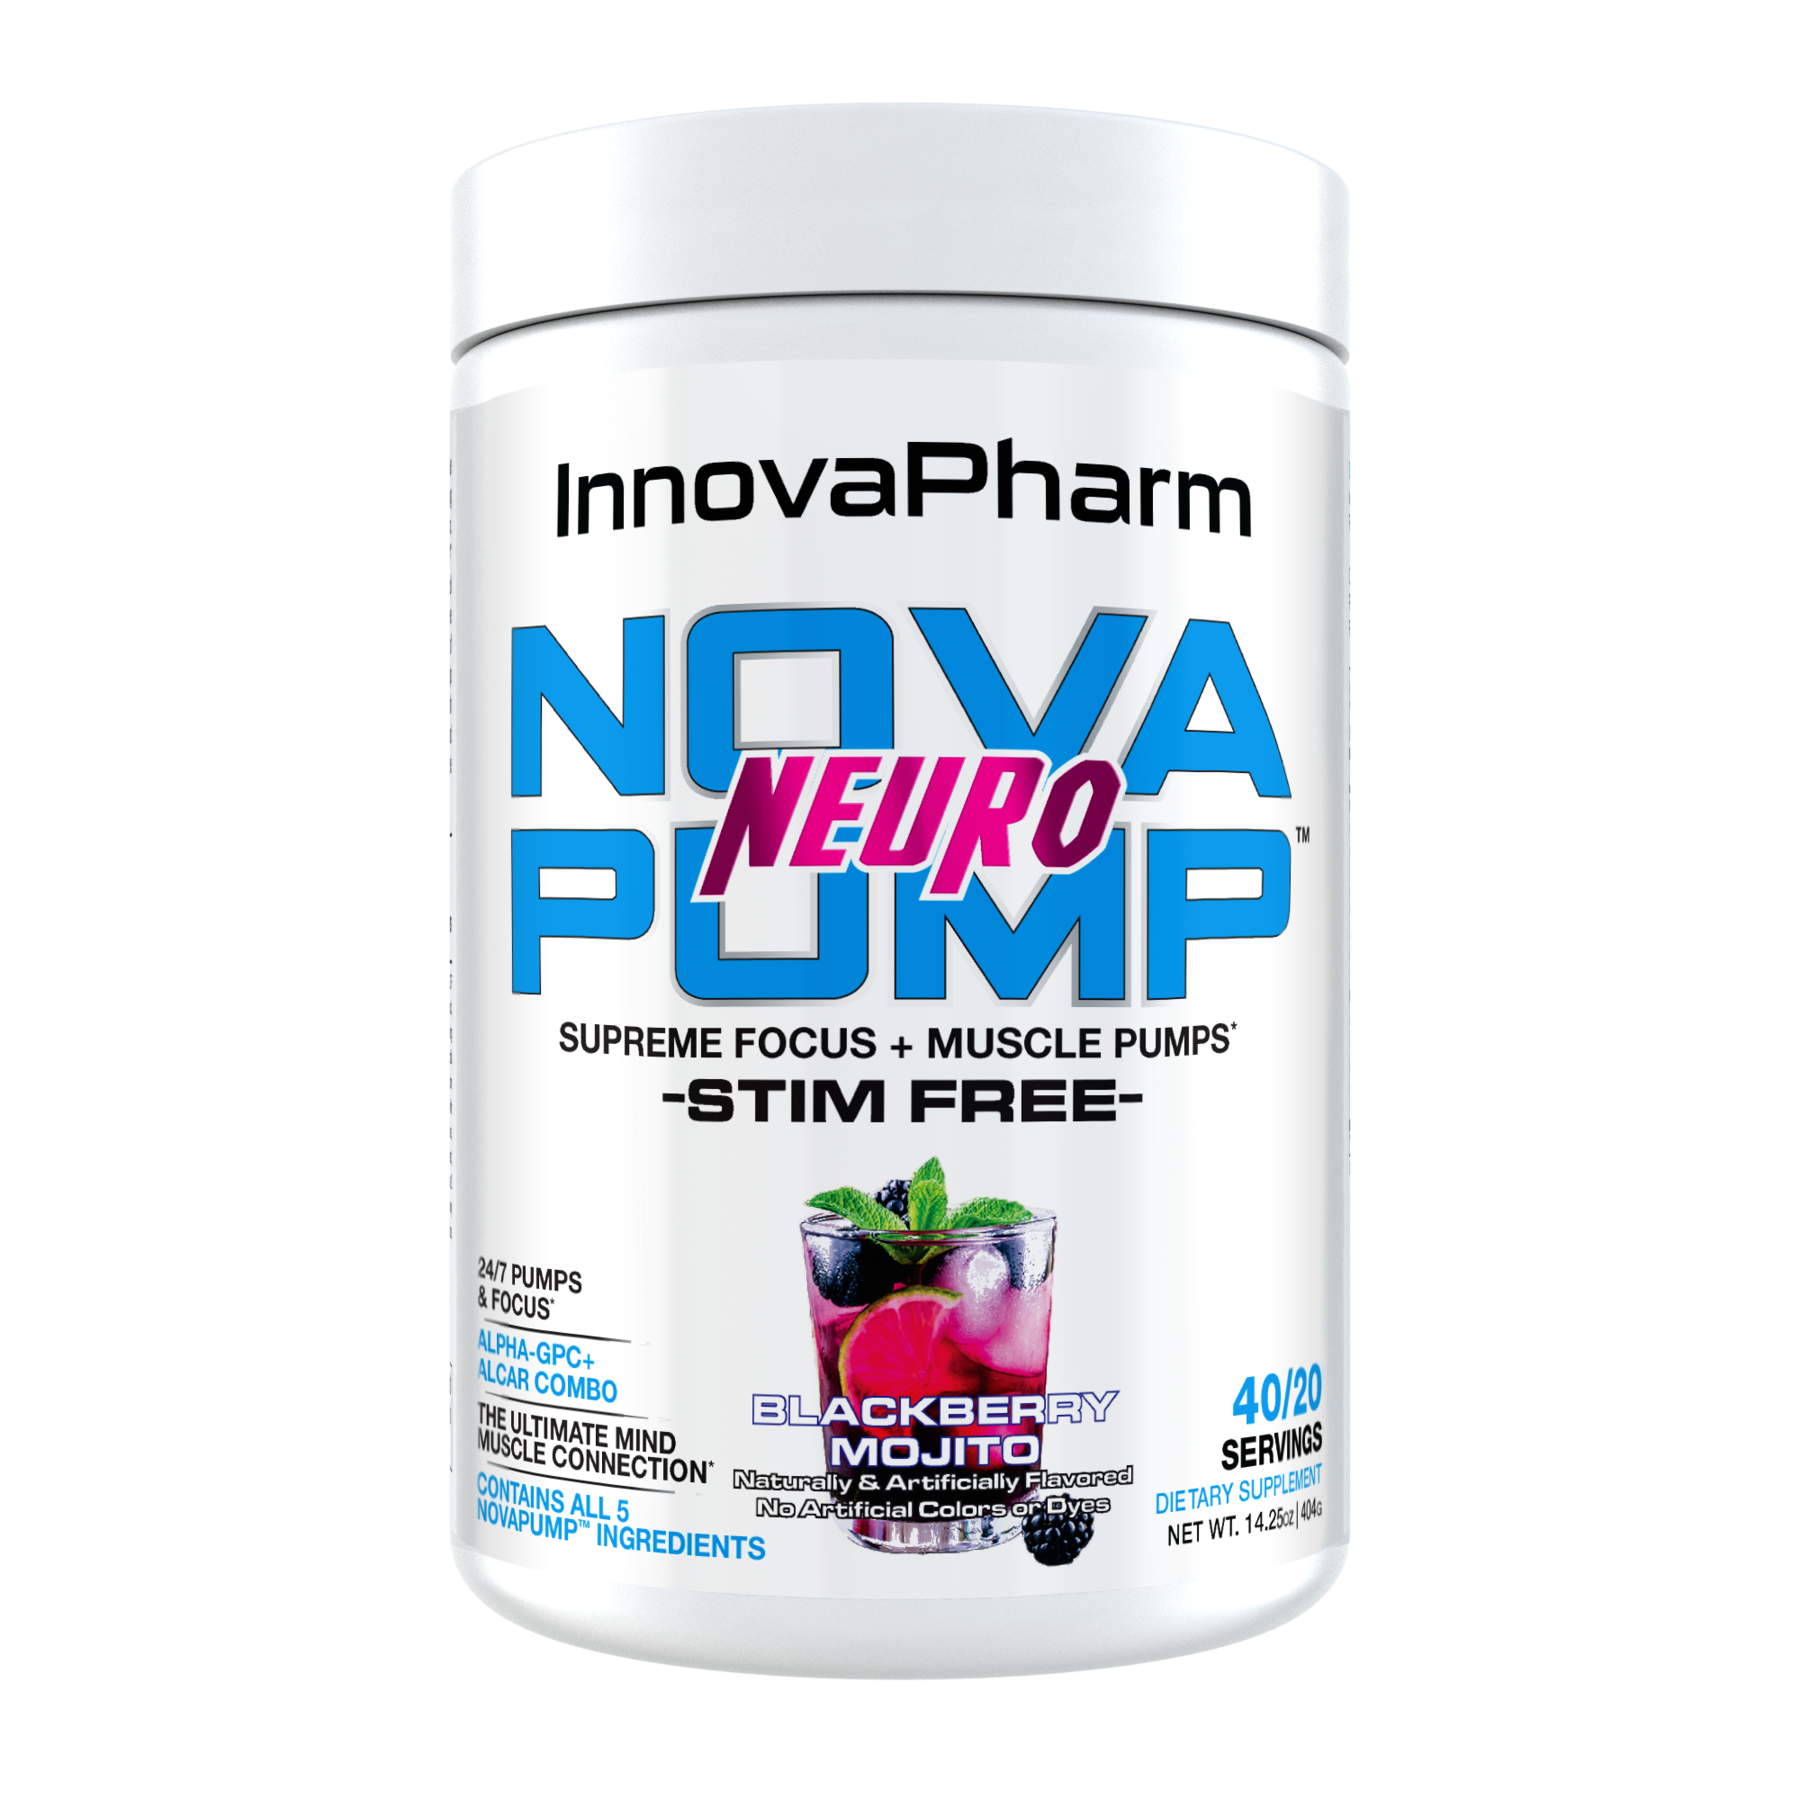 InnovaPharm NovaPump NEURO 40/20 Servings - Pre Workout Pump